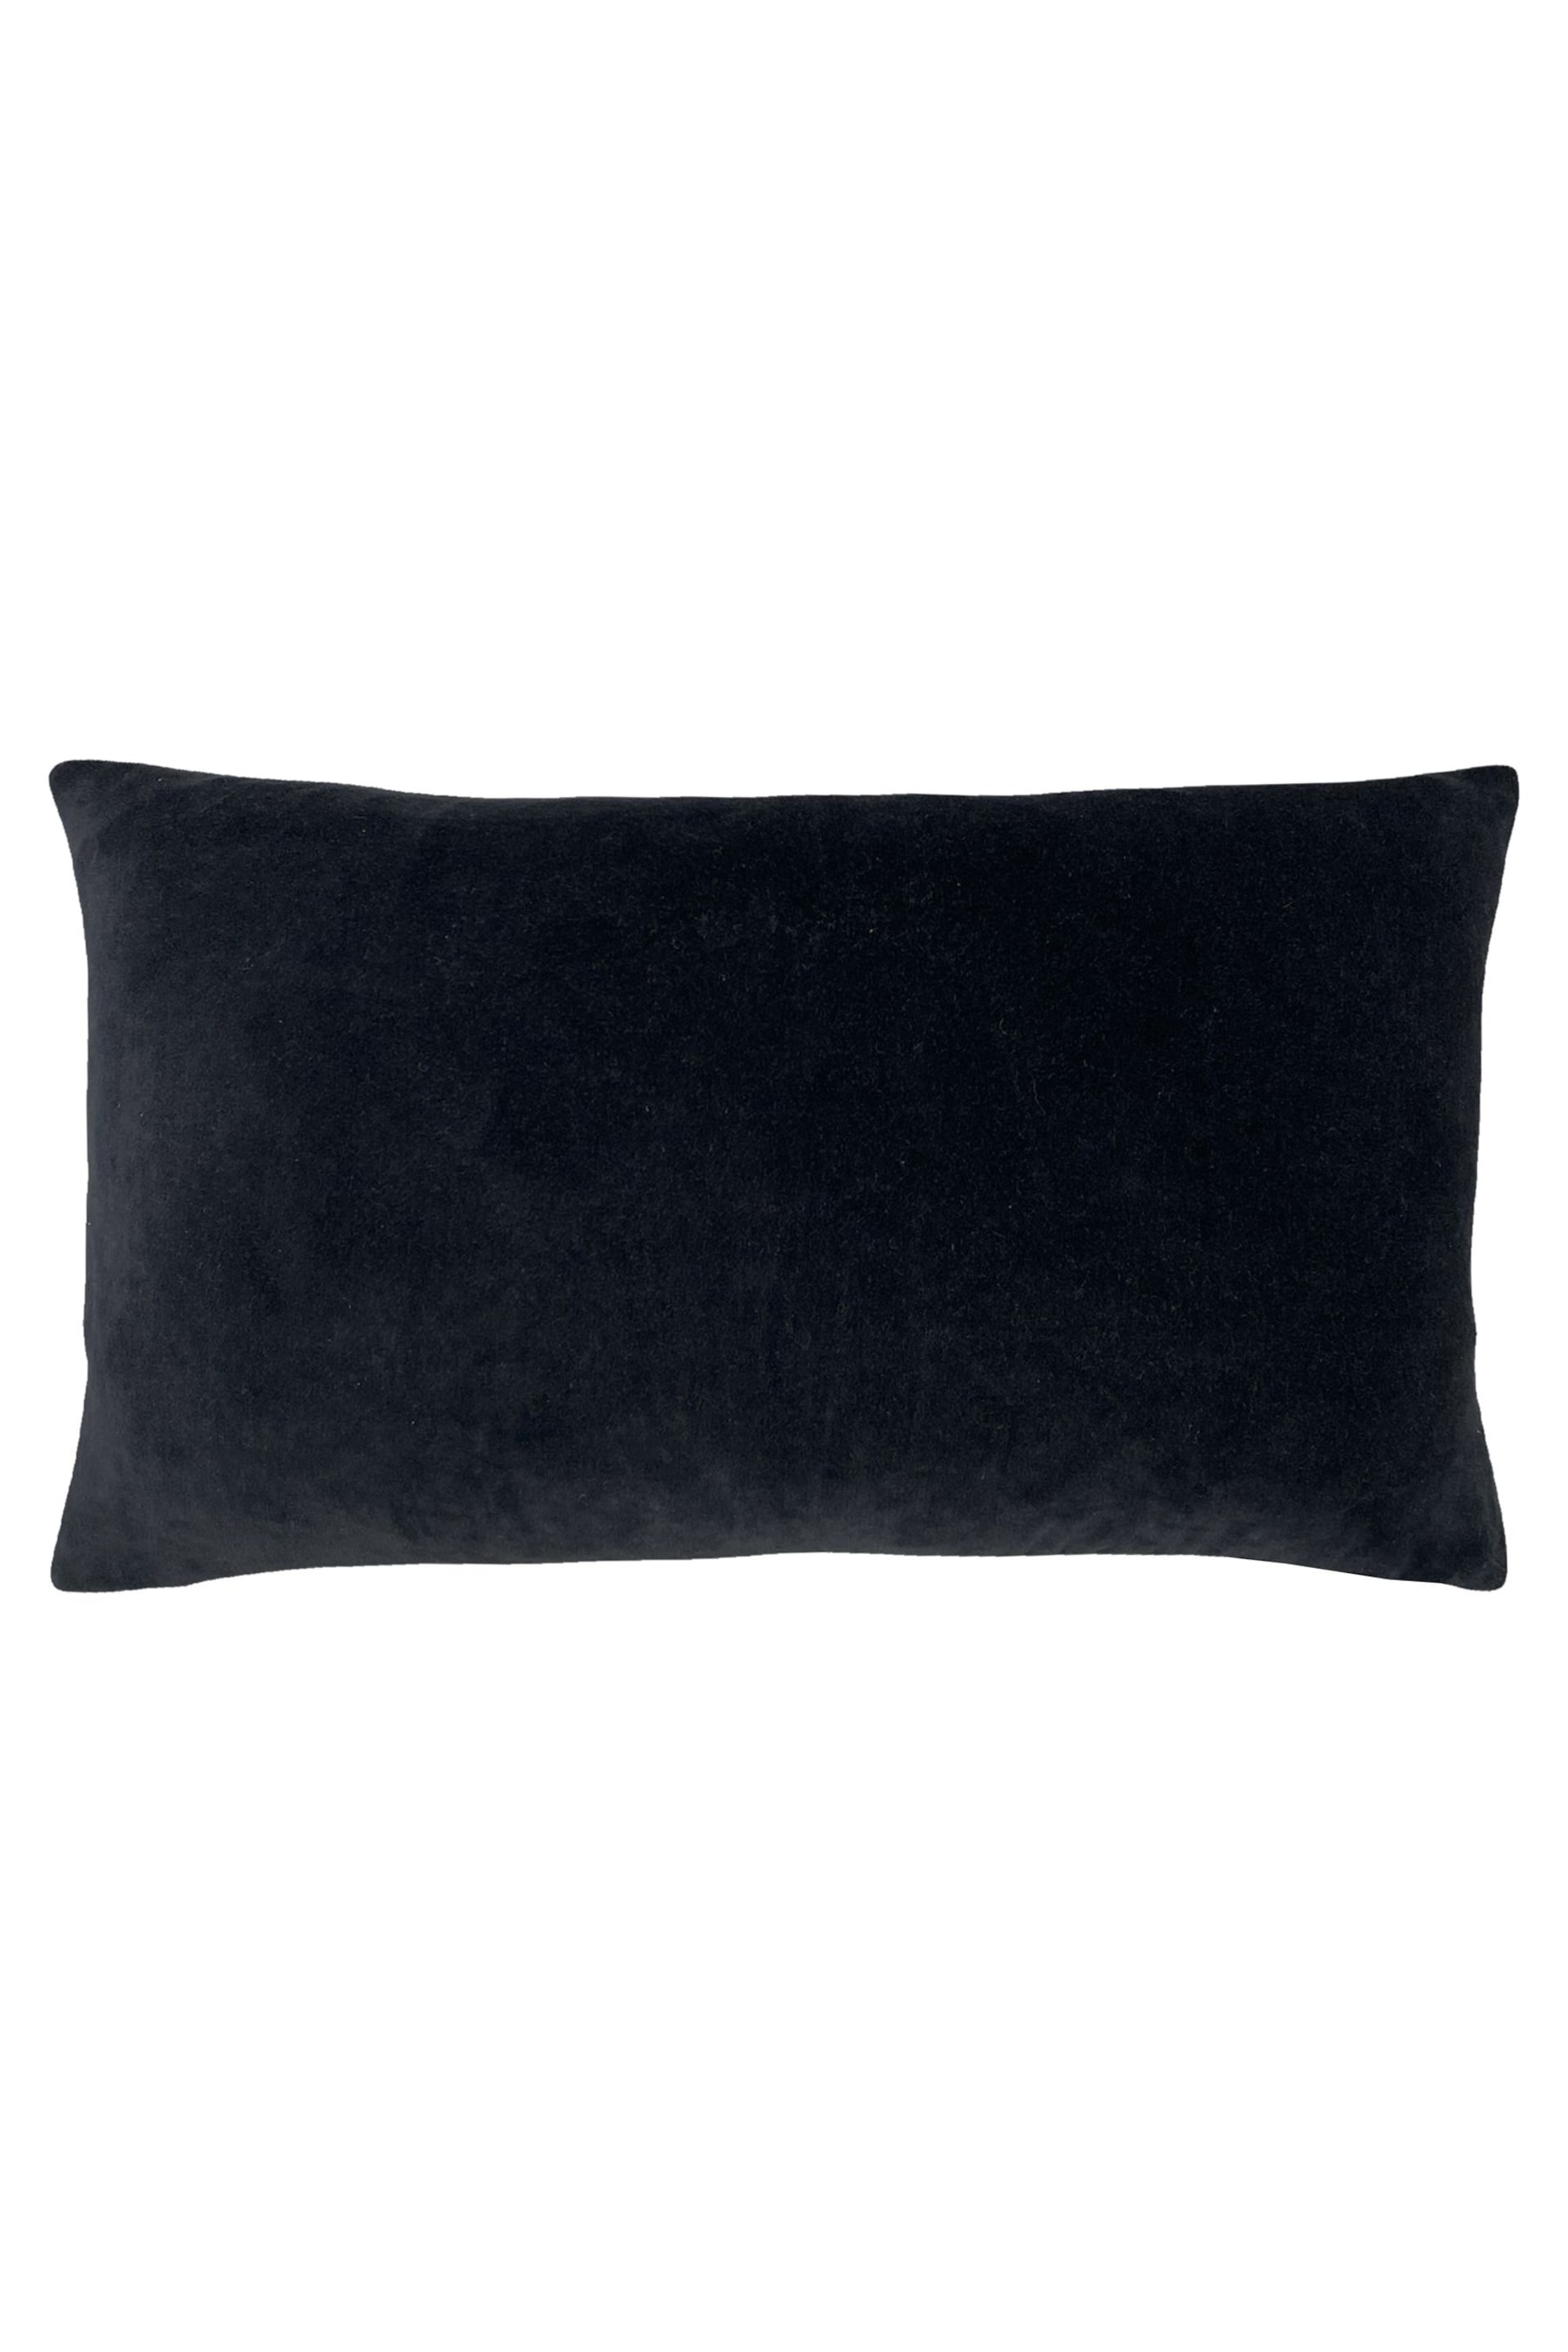 furn. Black Mangata Cushion - Image 2 of 3